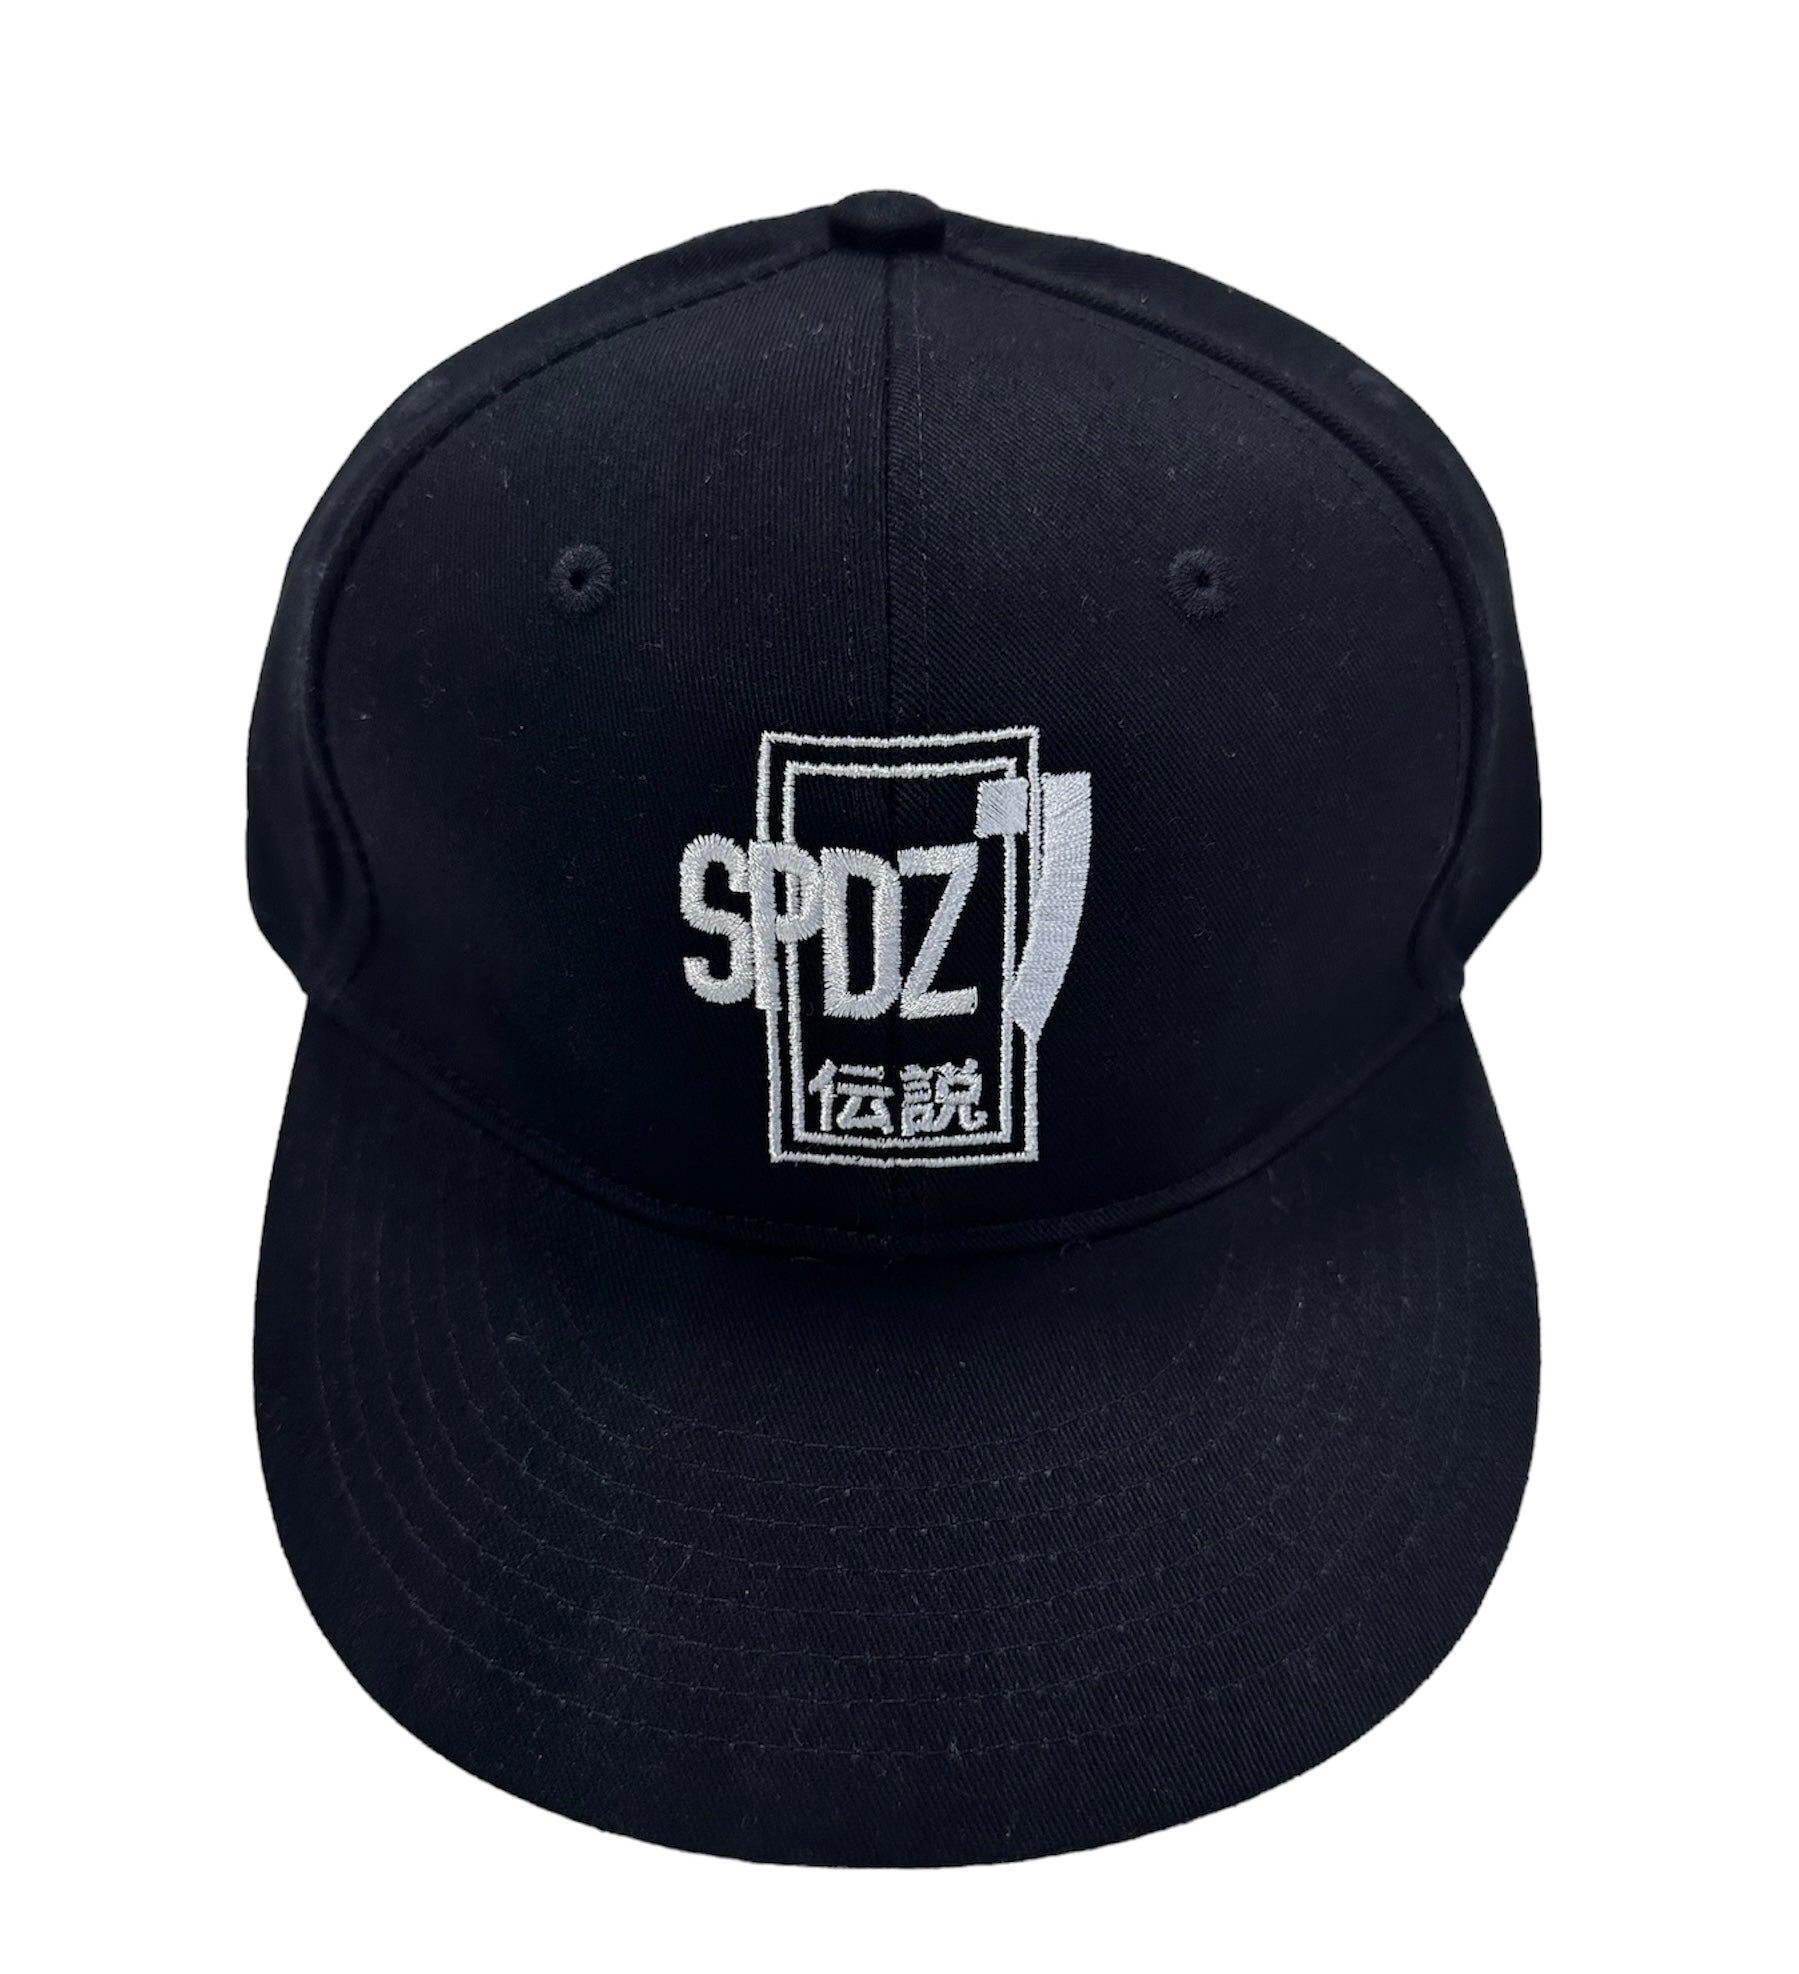 SPDZ1 Snap Back Hat